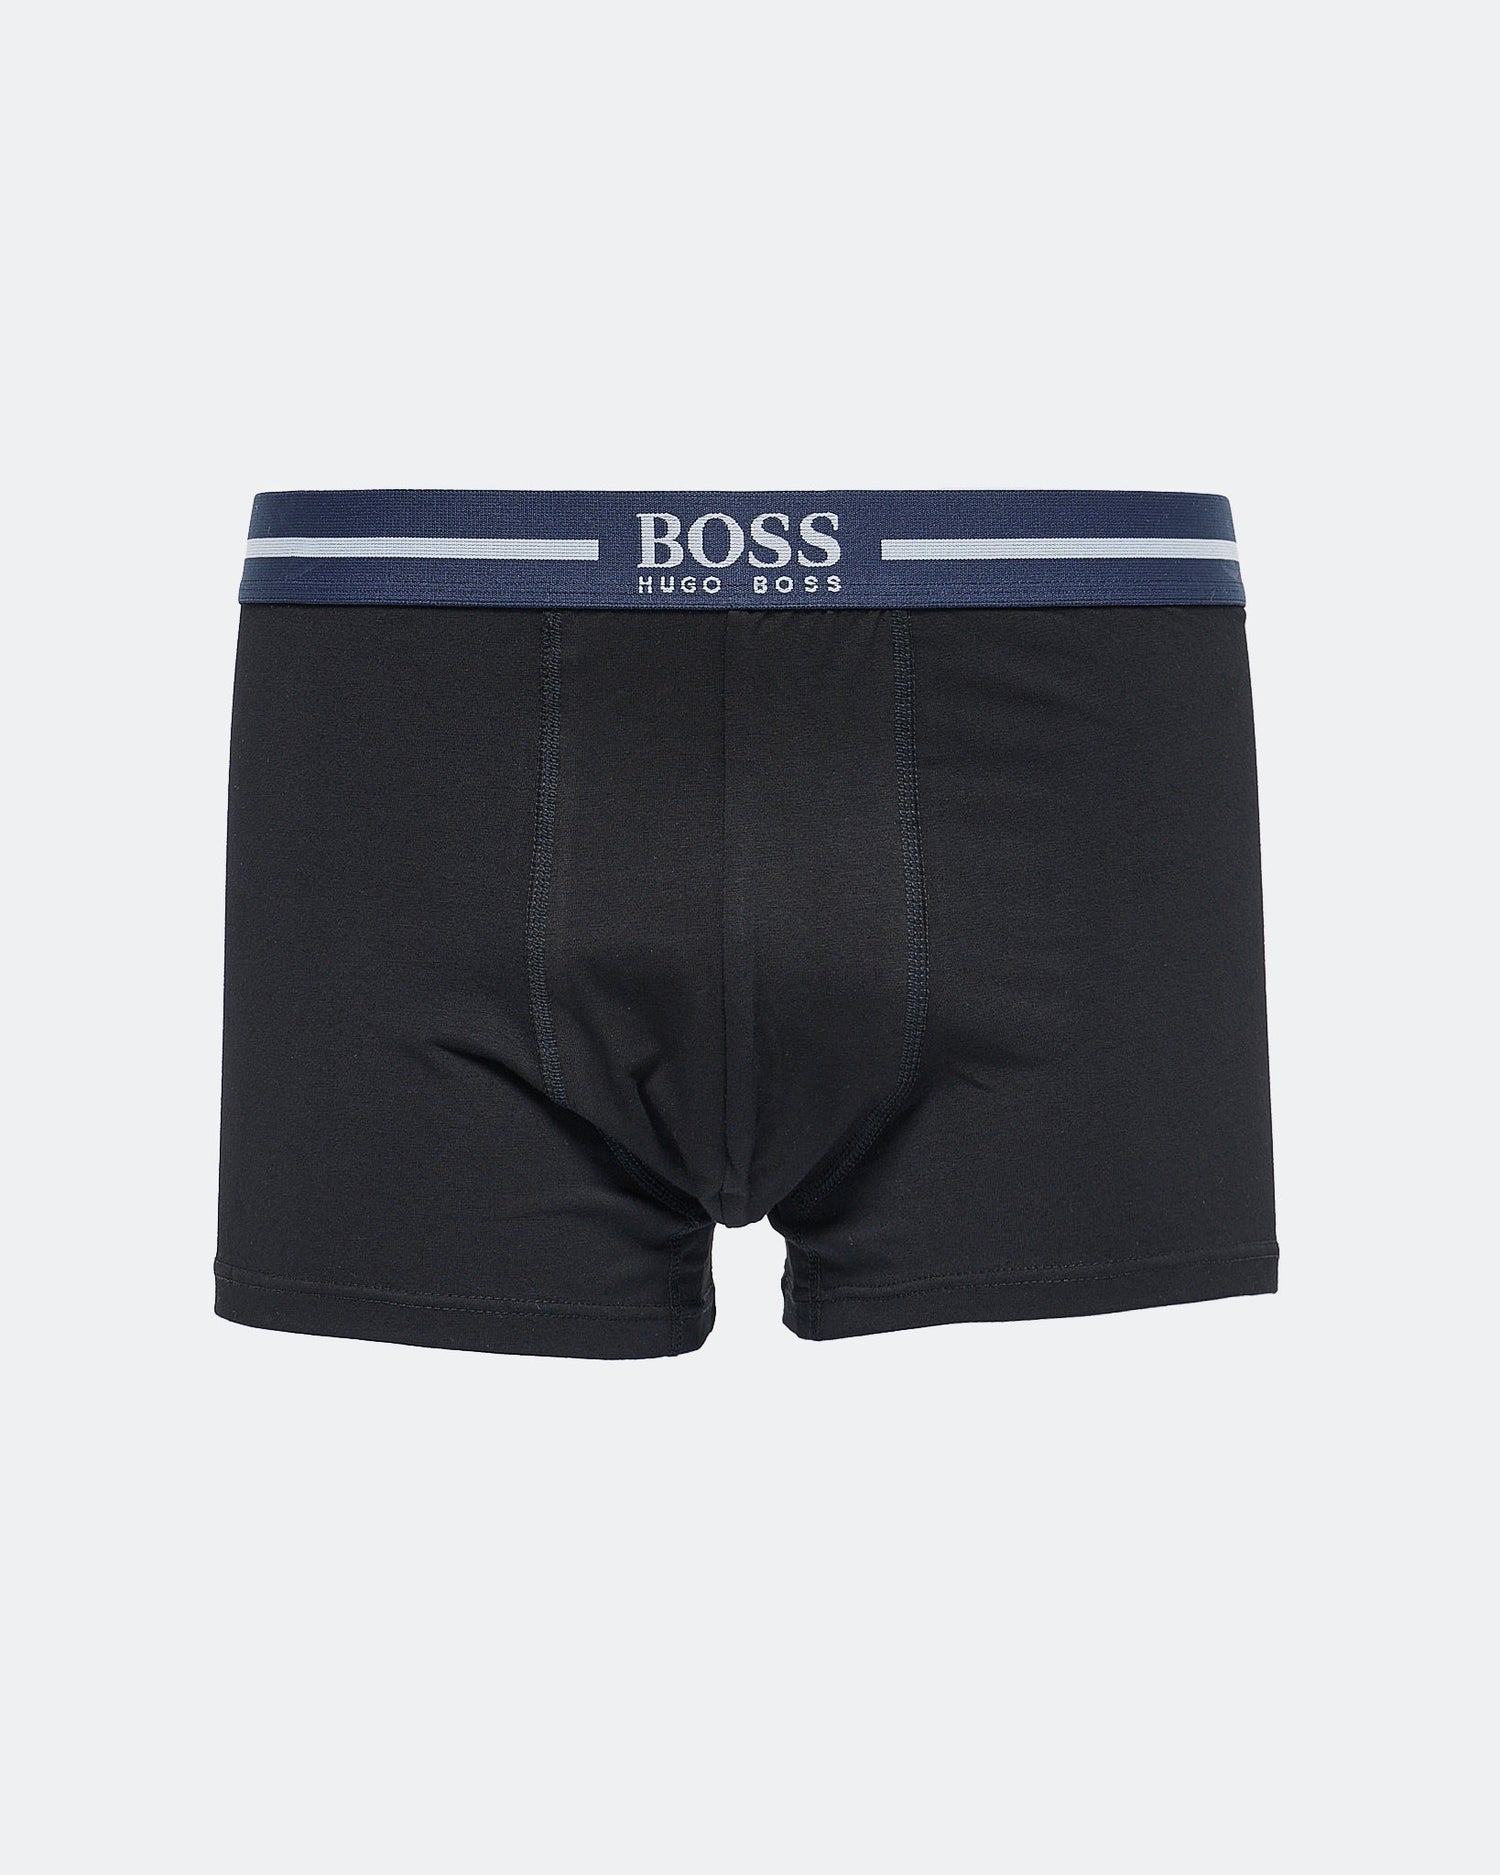 MOI OUTFIT-Boss Logo Printed Men Underwear 6.90